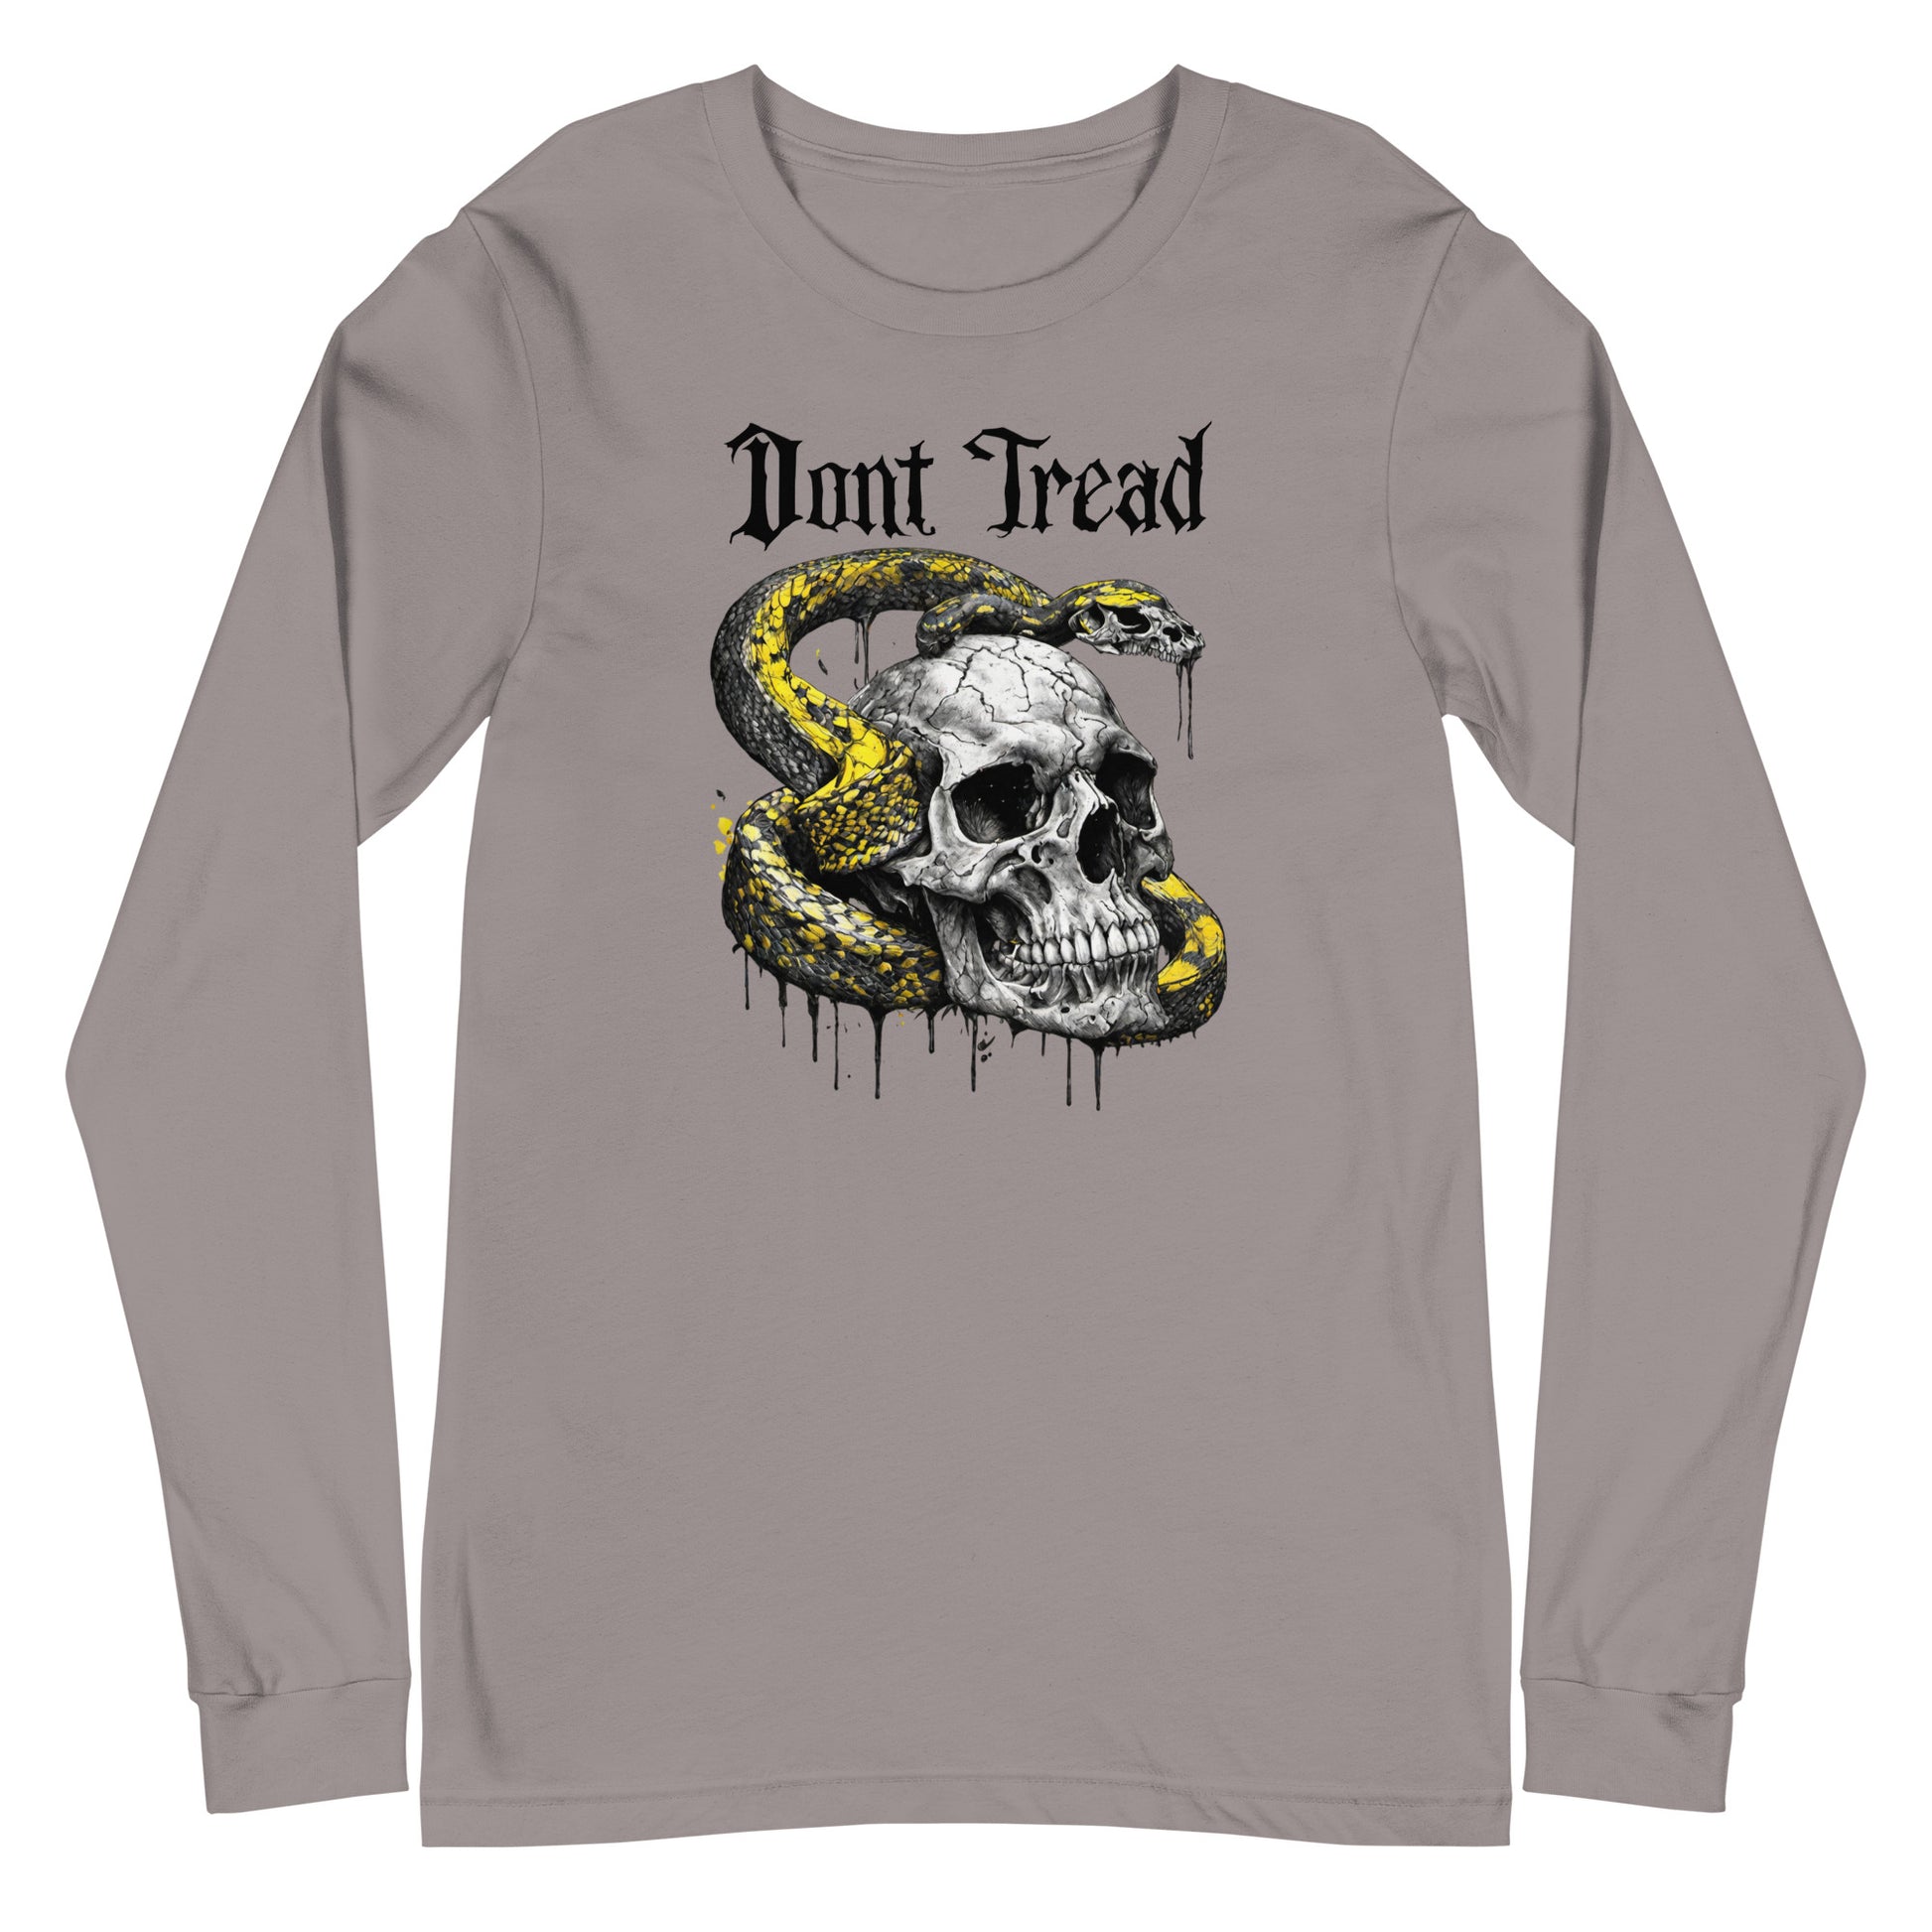 Don't Tread Snake & Skull 2nd Amendment Long Sleeve Tee Storm